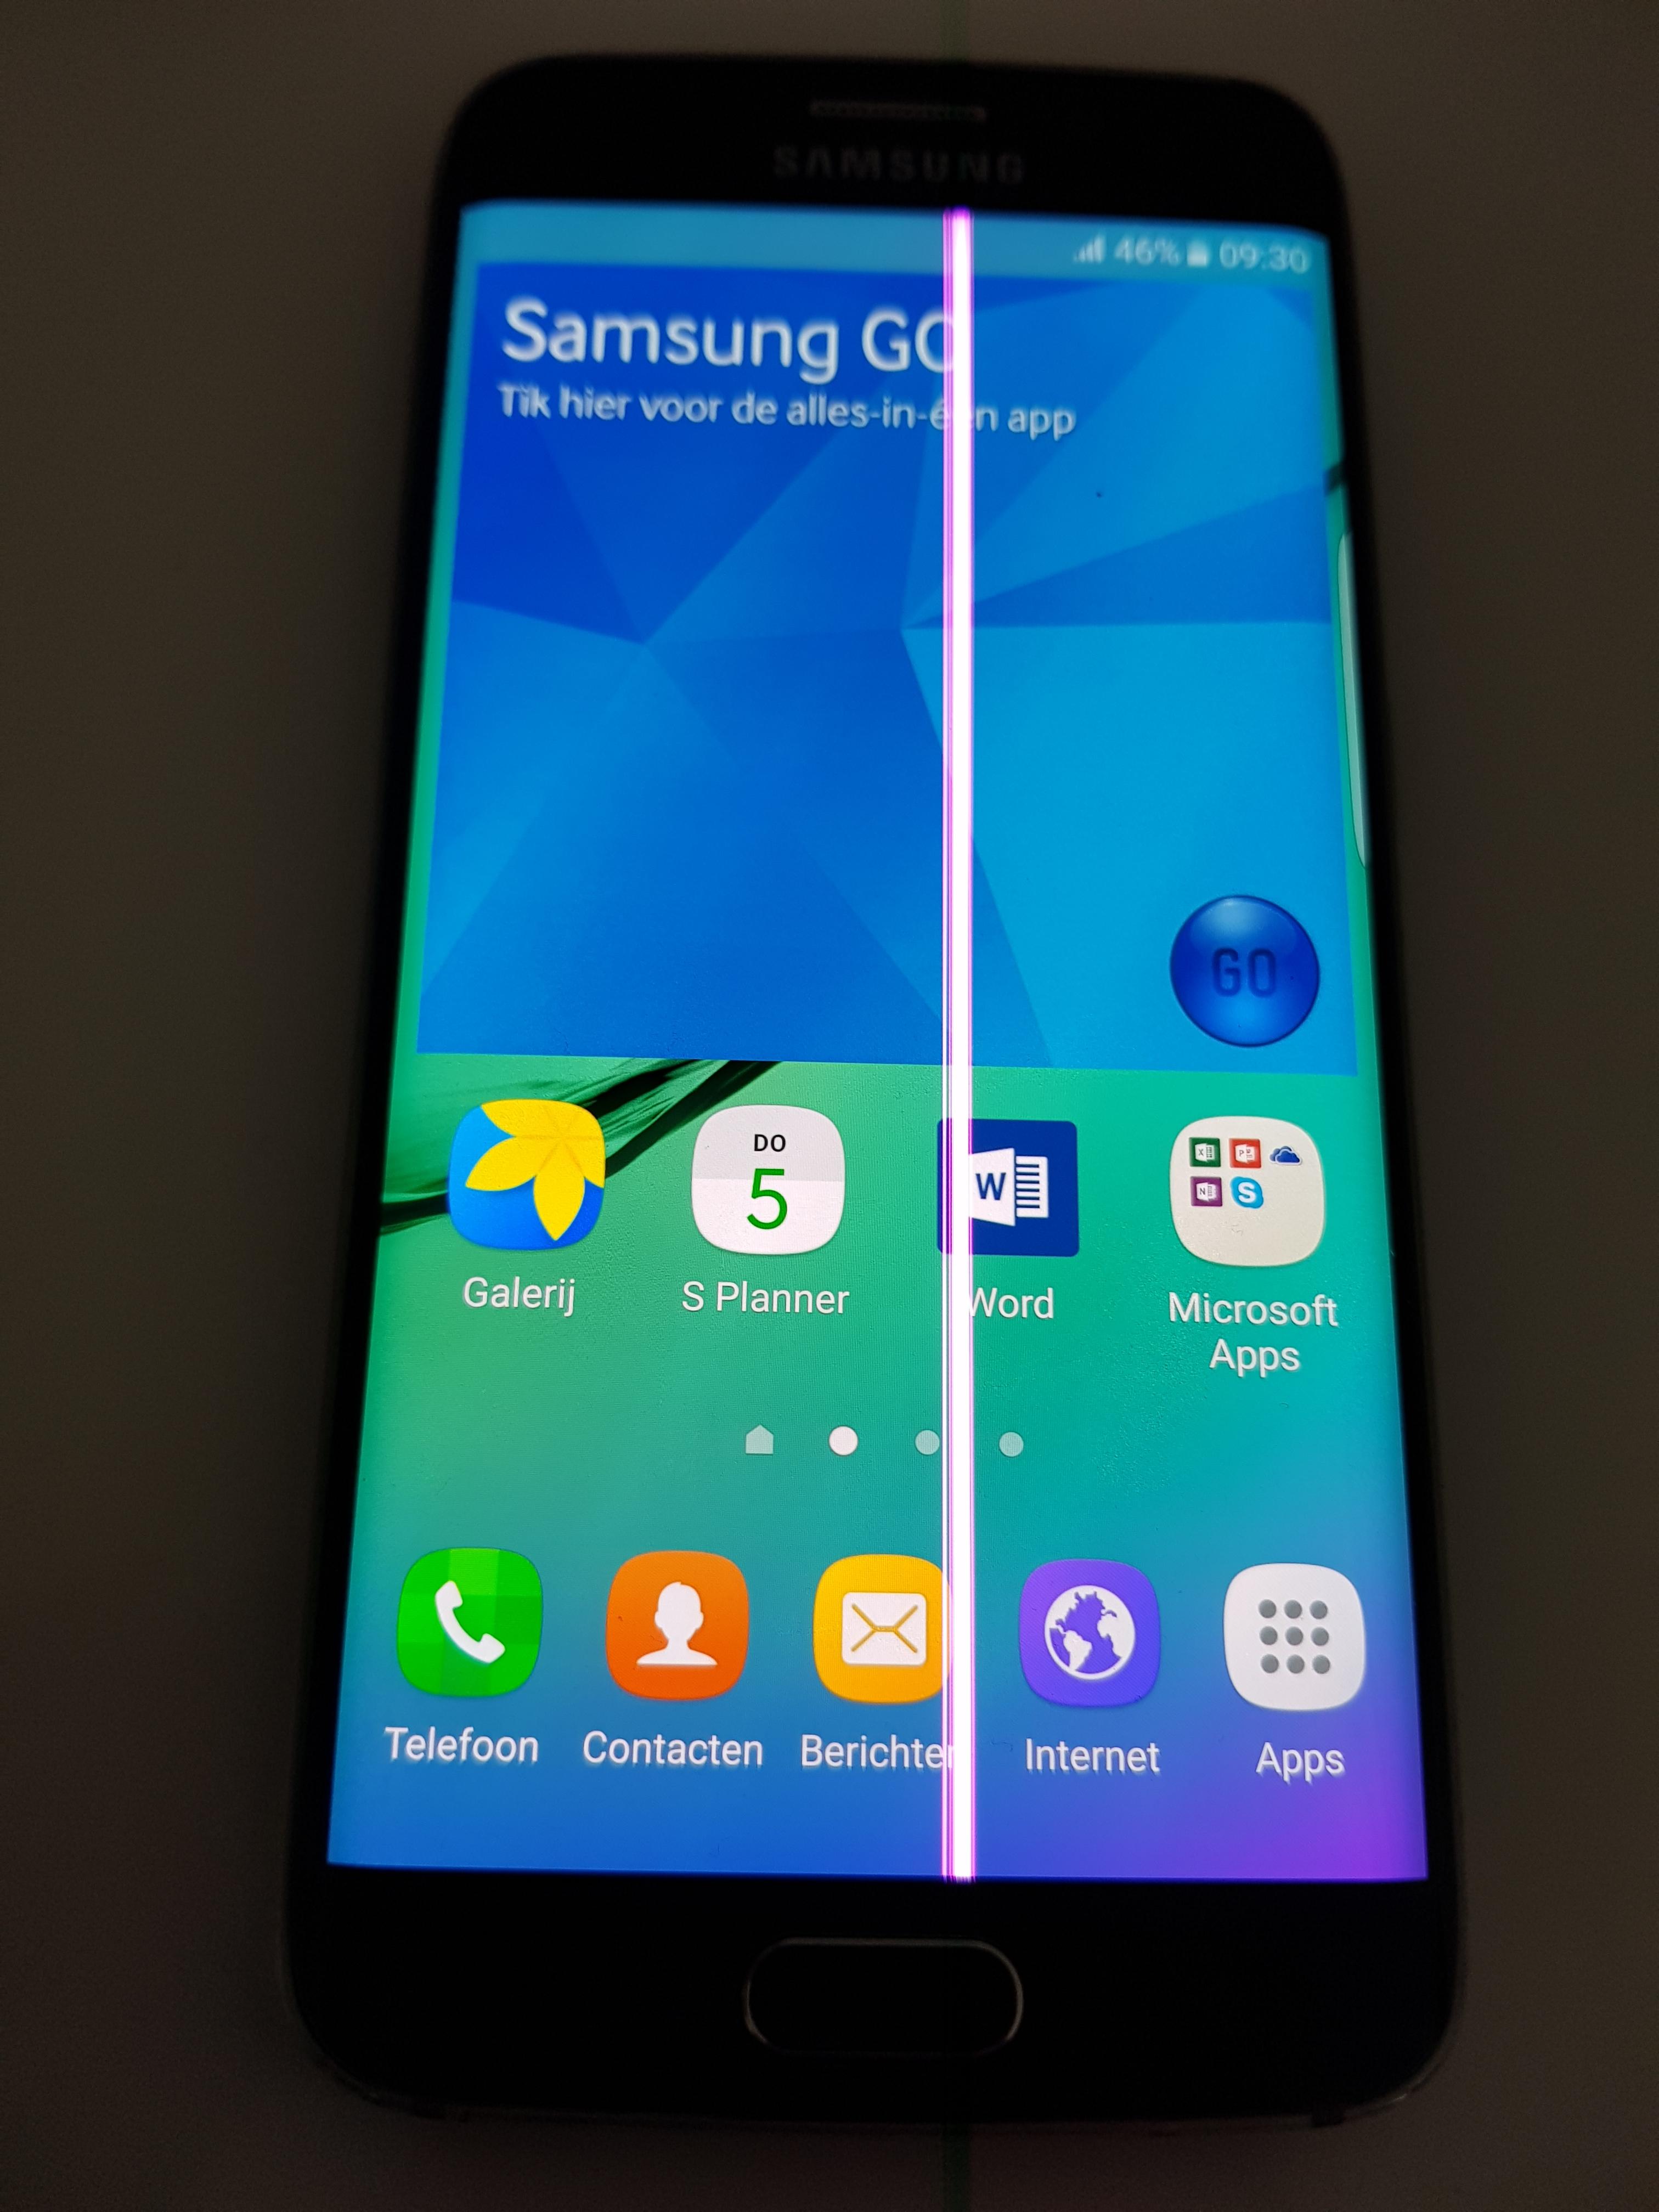 straal zich zorgen maken Minachting Samsung galaxy s6 edge met roze streep - Samsung Community